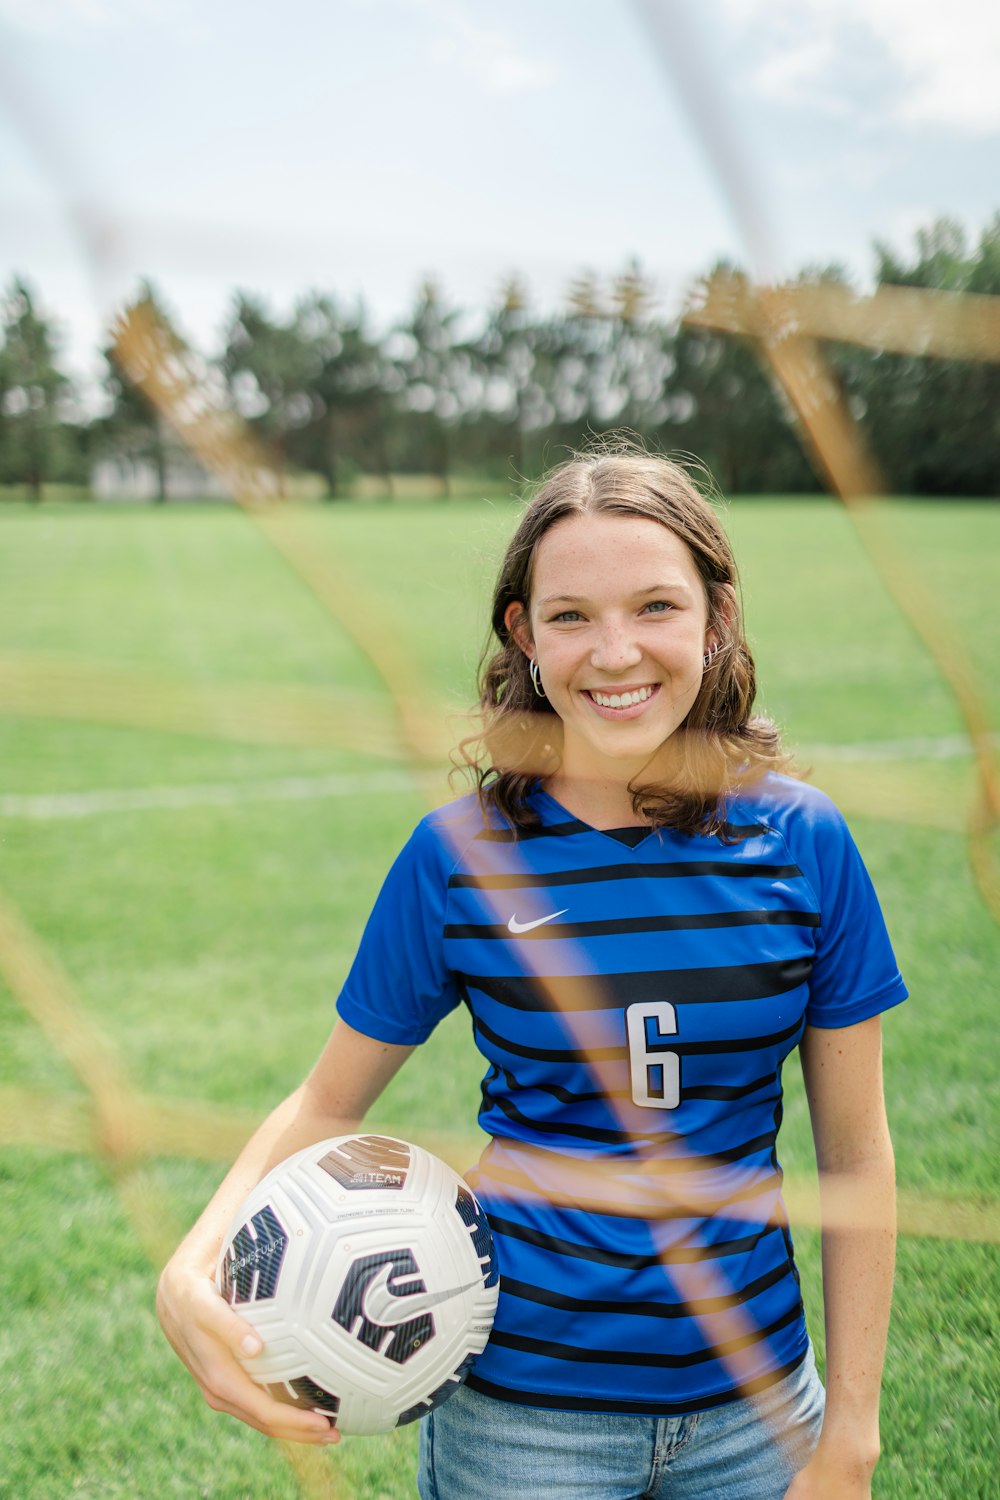 a girl in a blue shirt holding a soccer ball